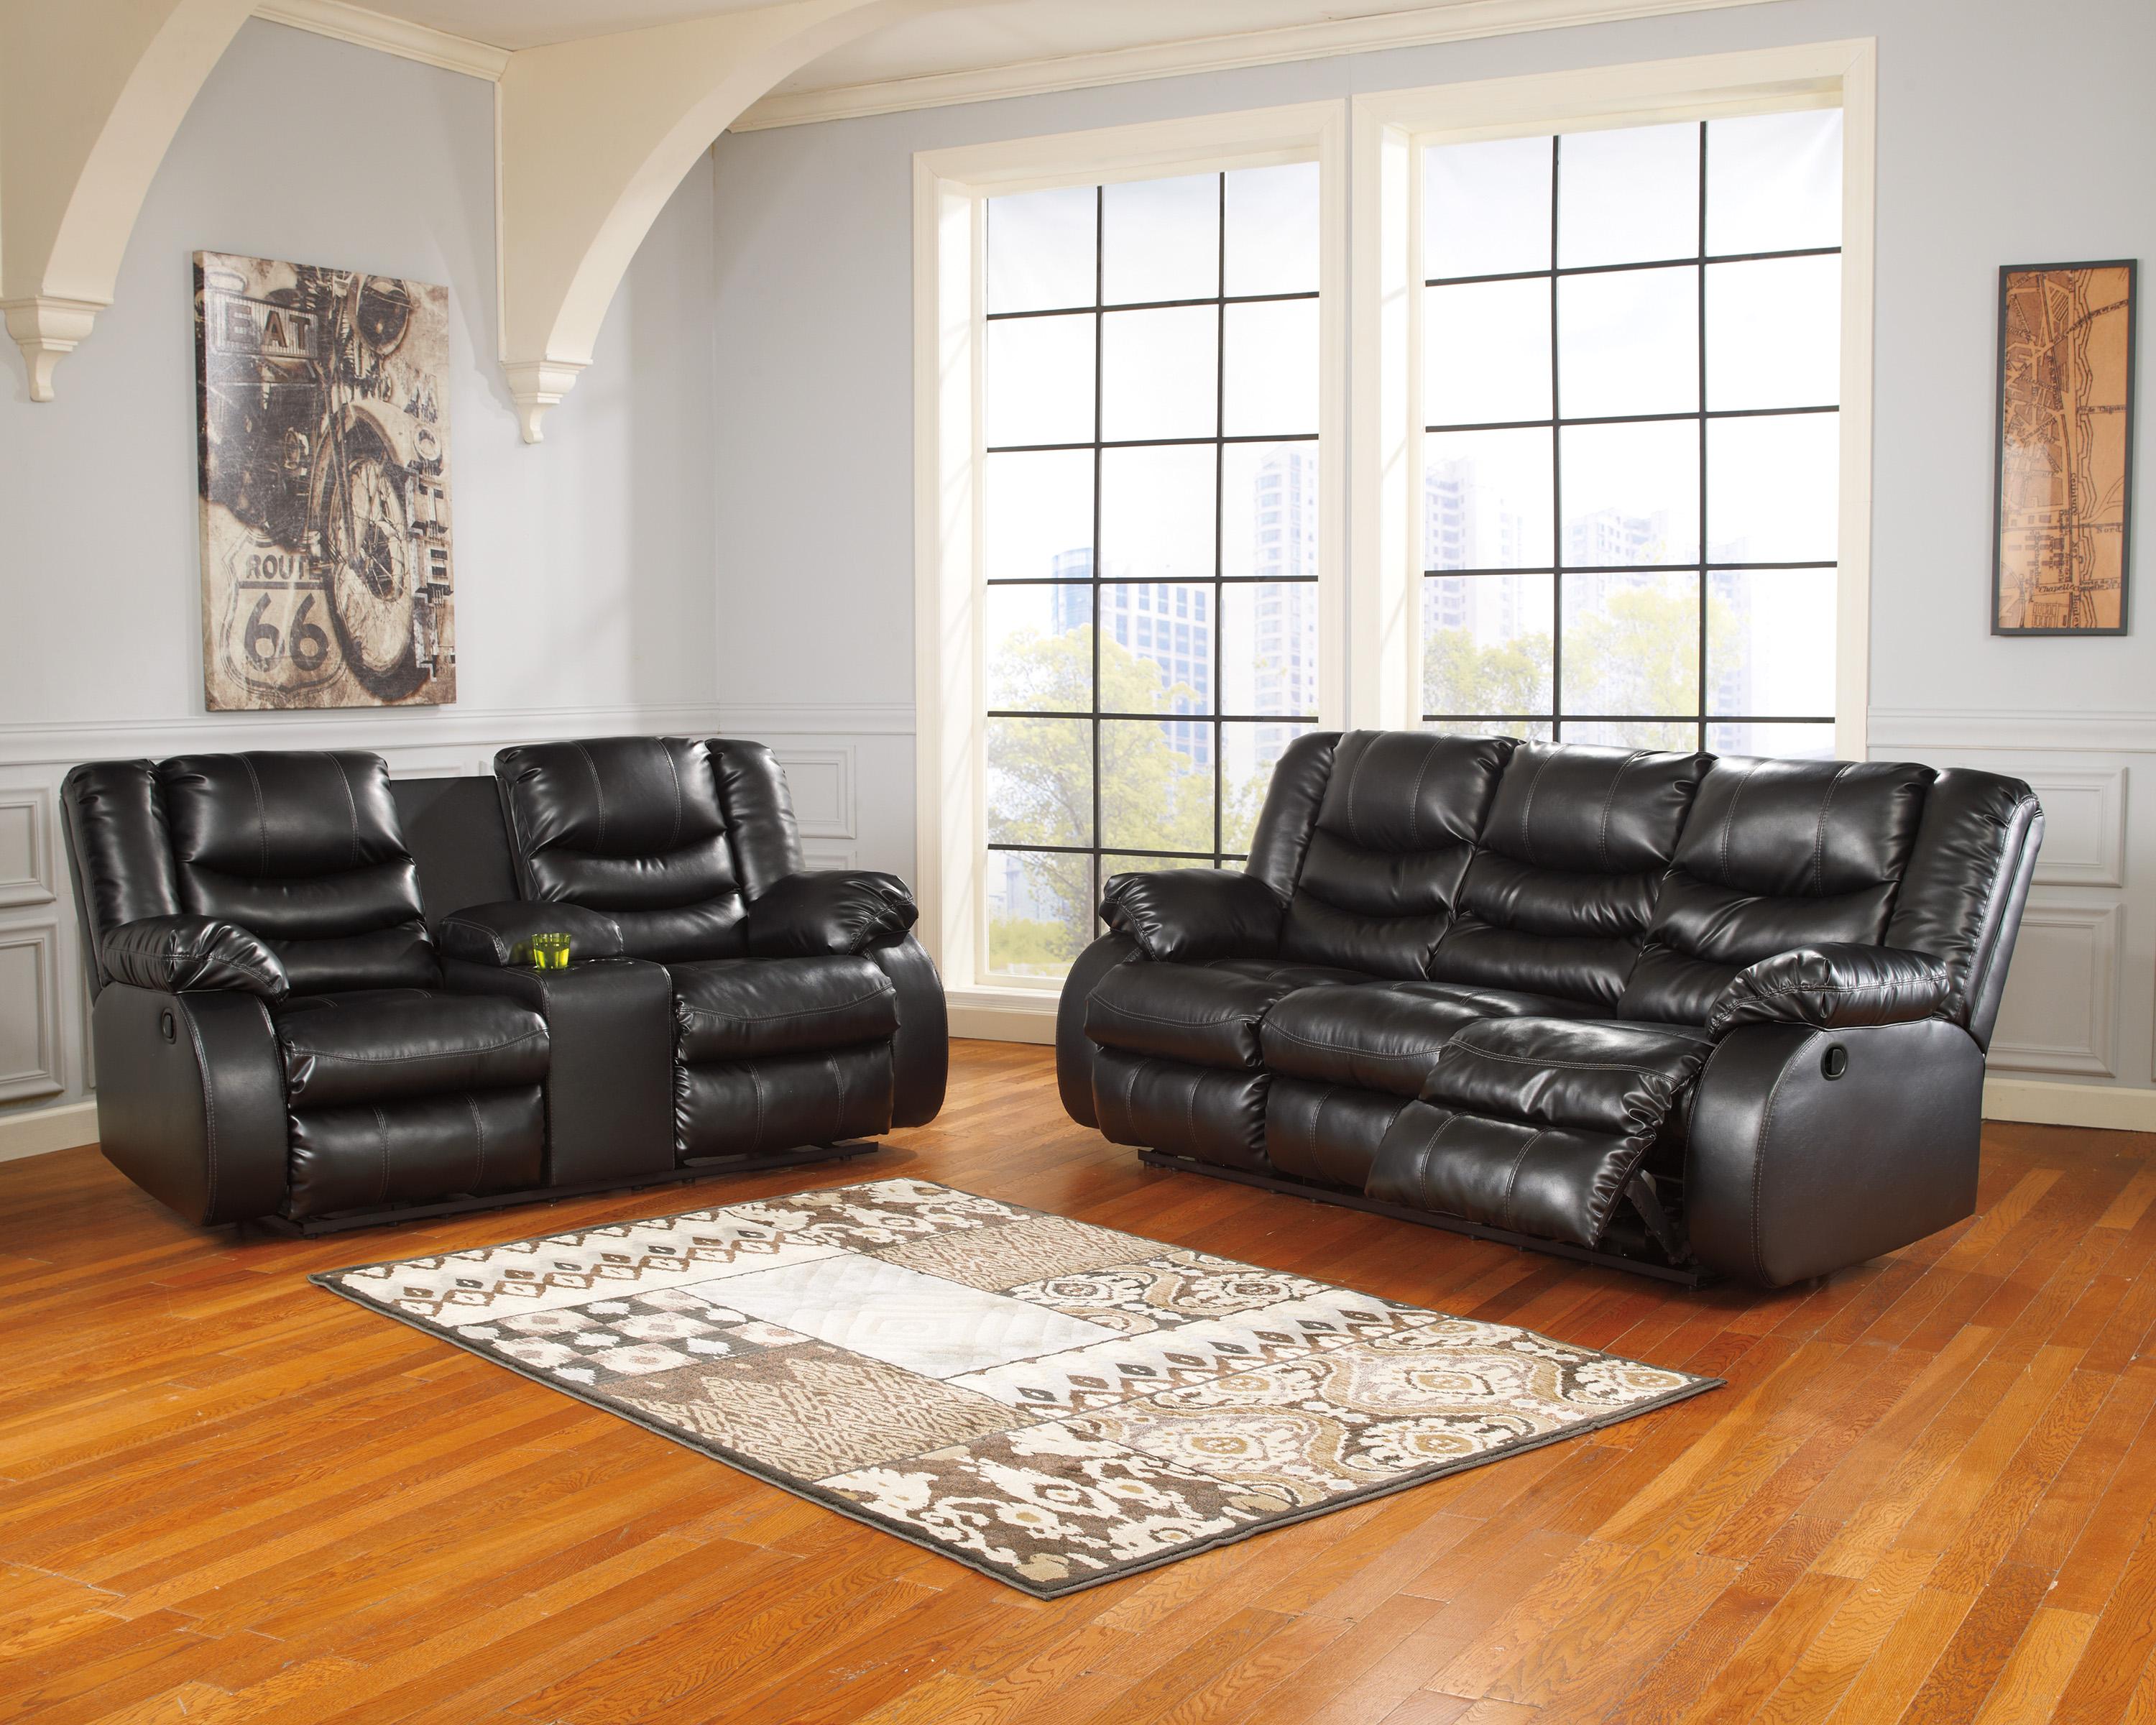 

    
Ashley Linebacker DuraBlend 2 Piece Living Room Set in Black 2387
